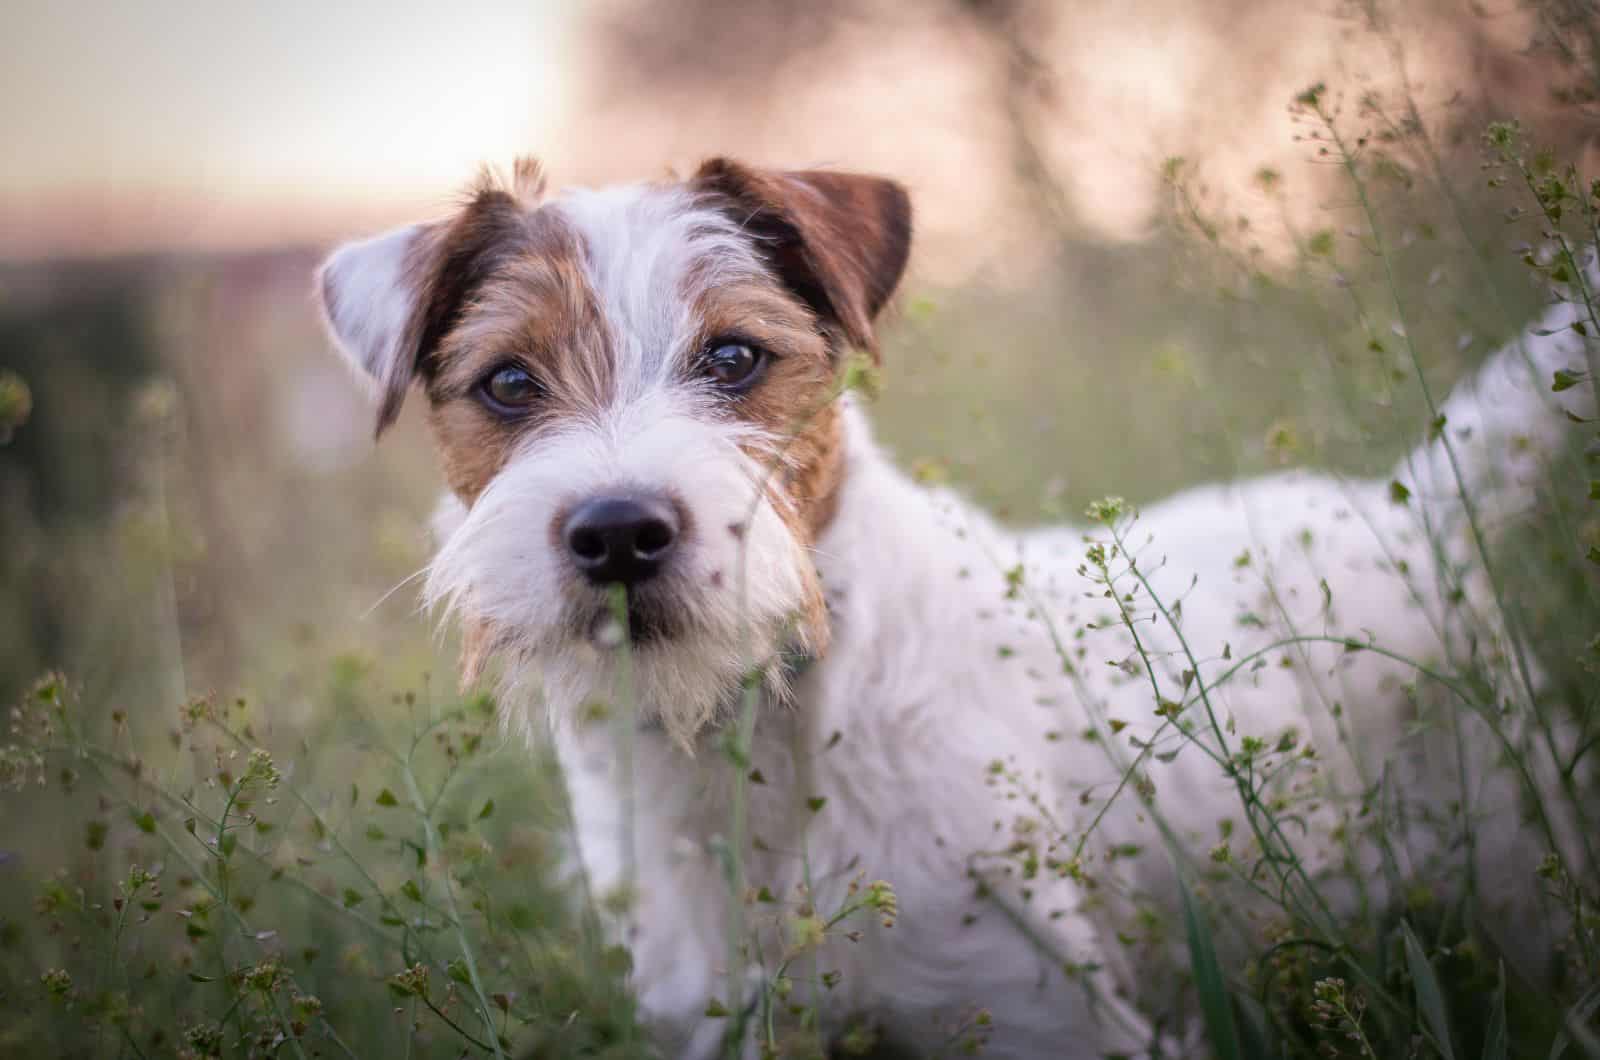 cute Parson Russell Terrier